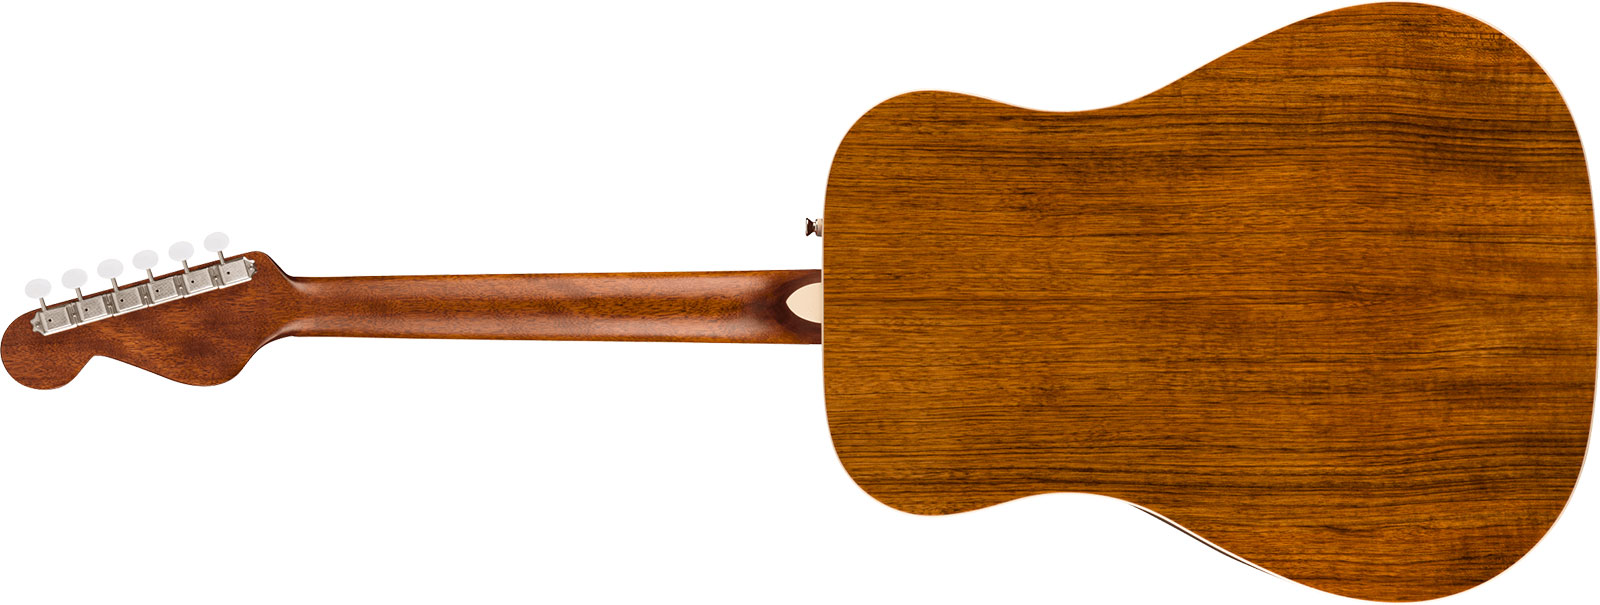 Fender King Vintage California Dreadnought Epicea Ovangkol Ova - Mojave - Electro acoustic guitar - Variation 1